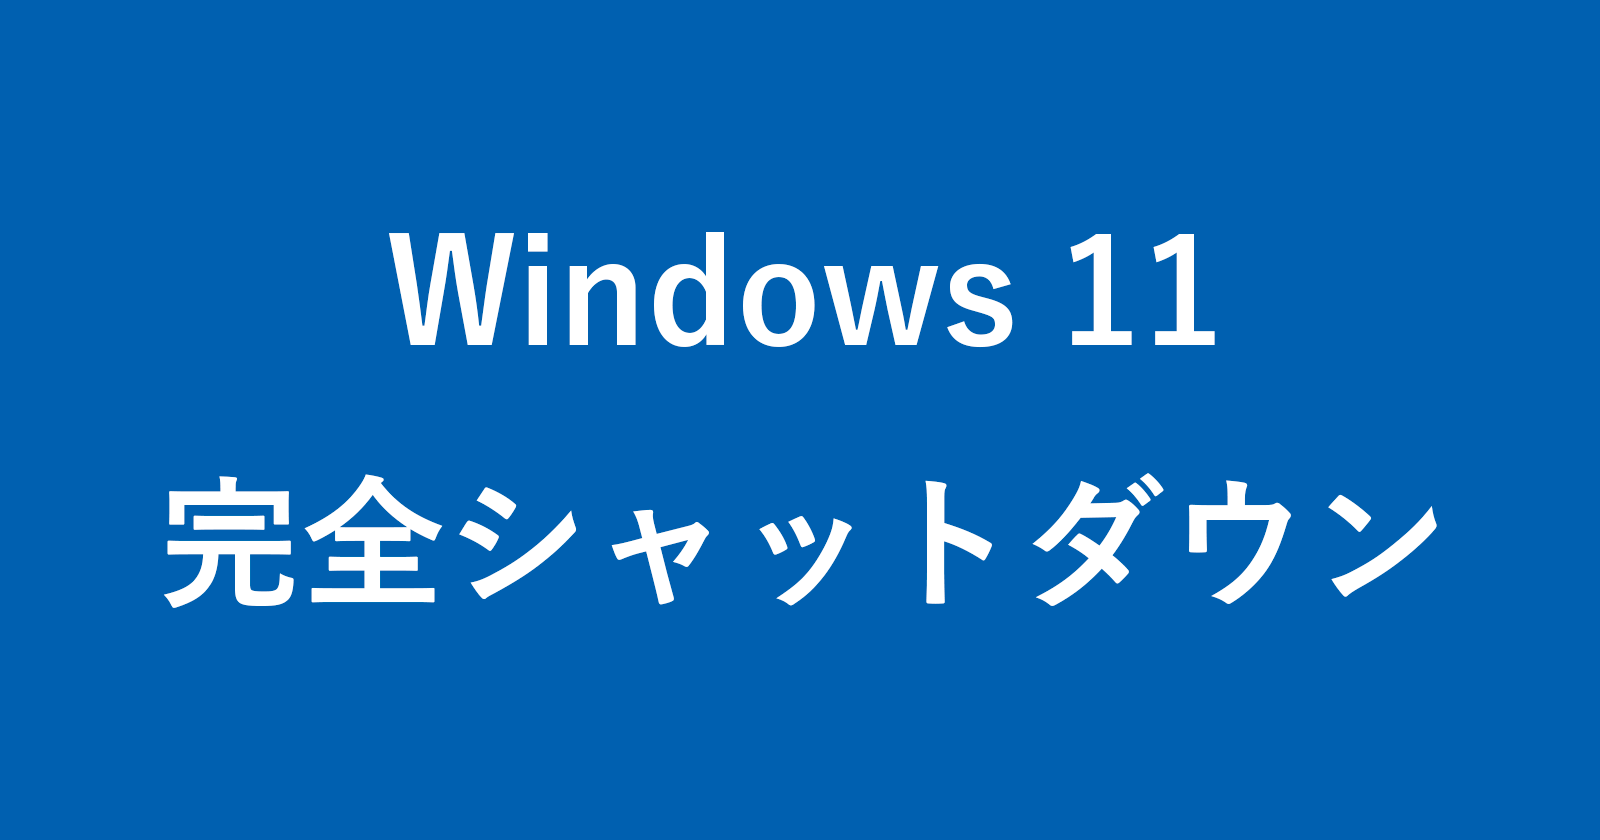 windows 11 full shutdown